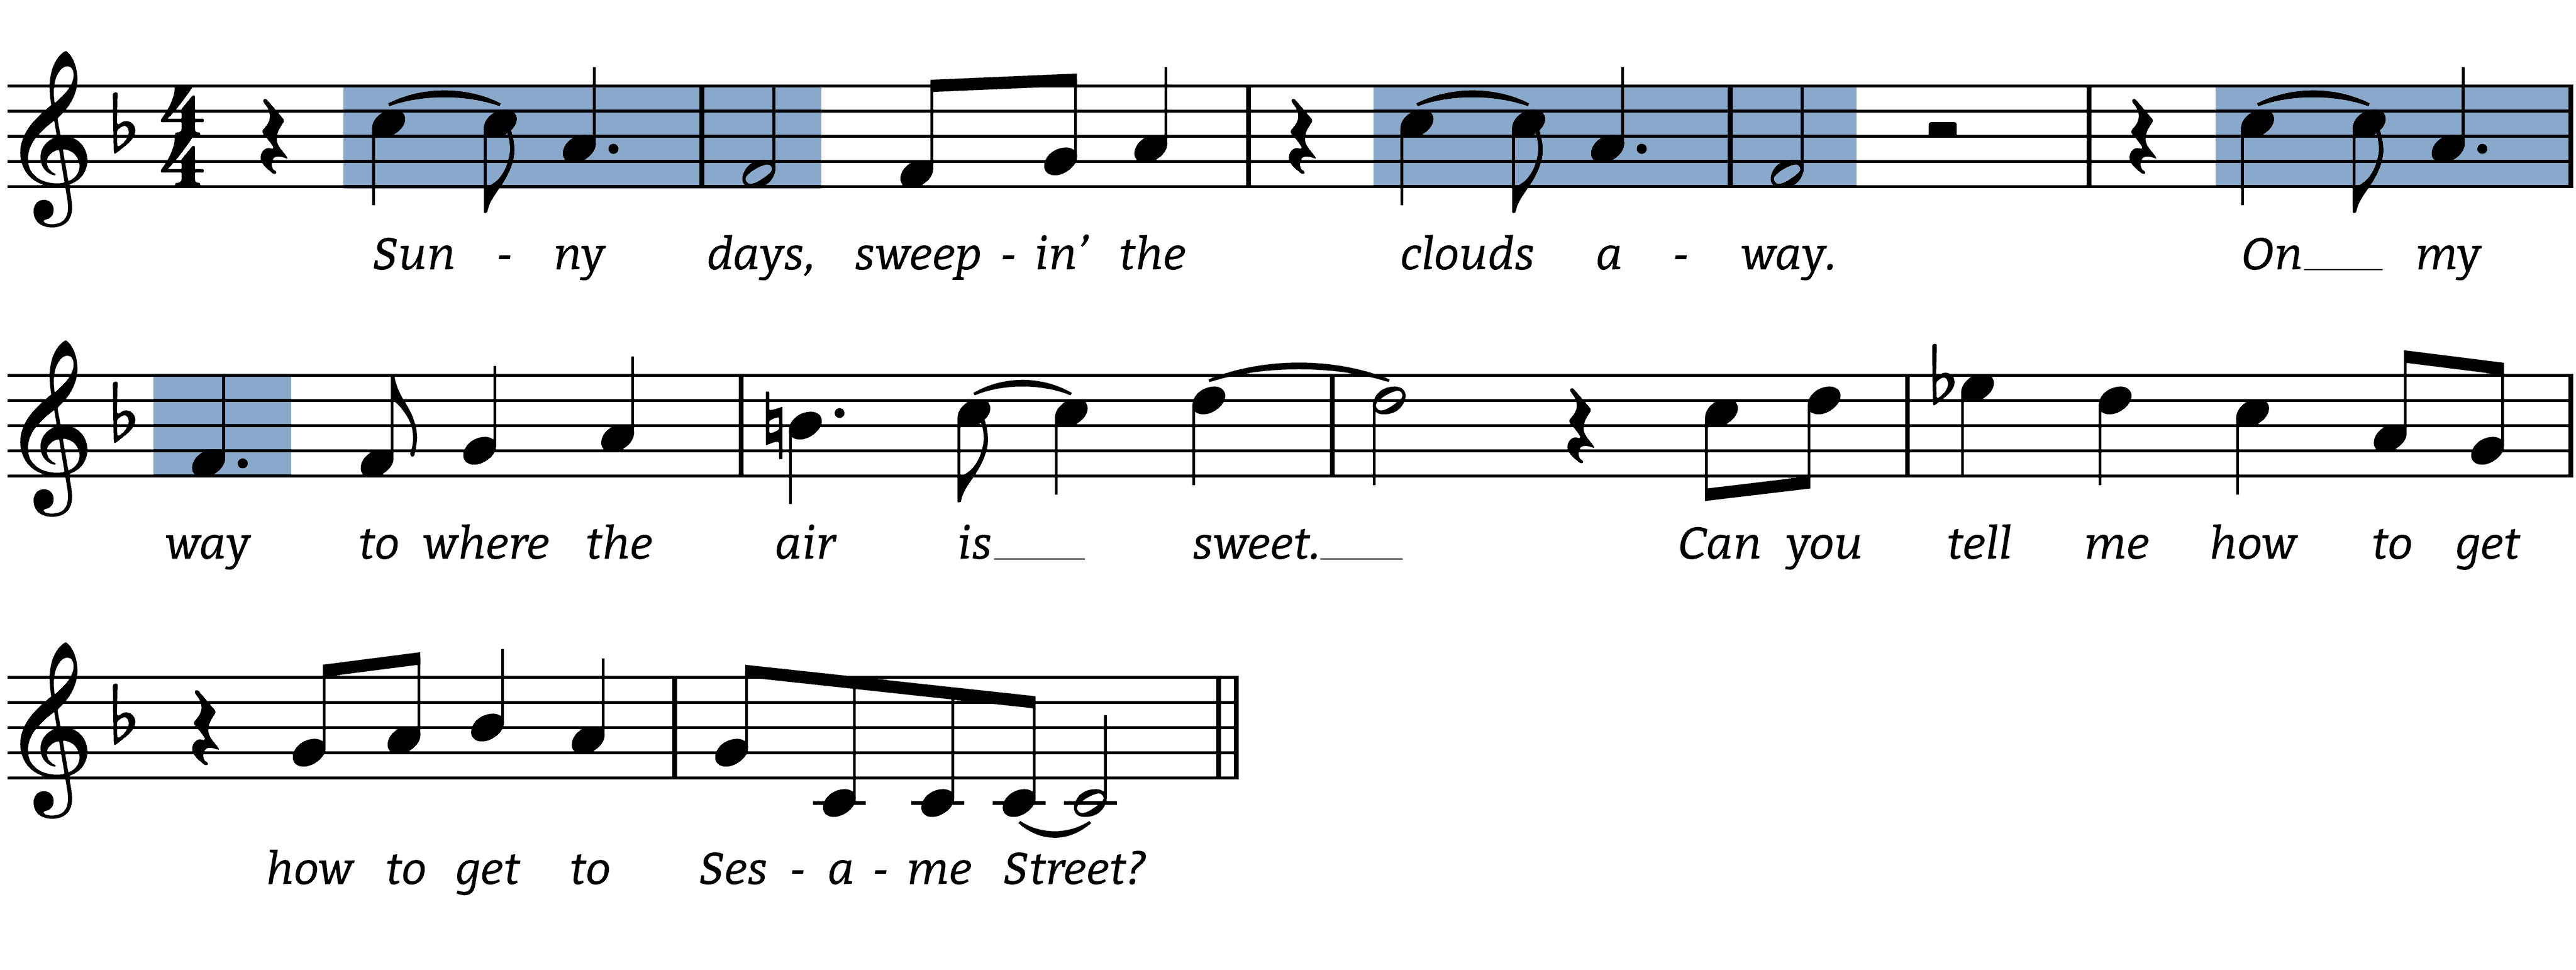 Sesame Street melodic figures